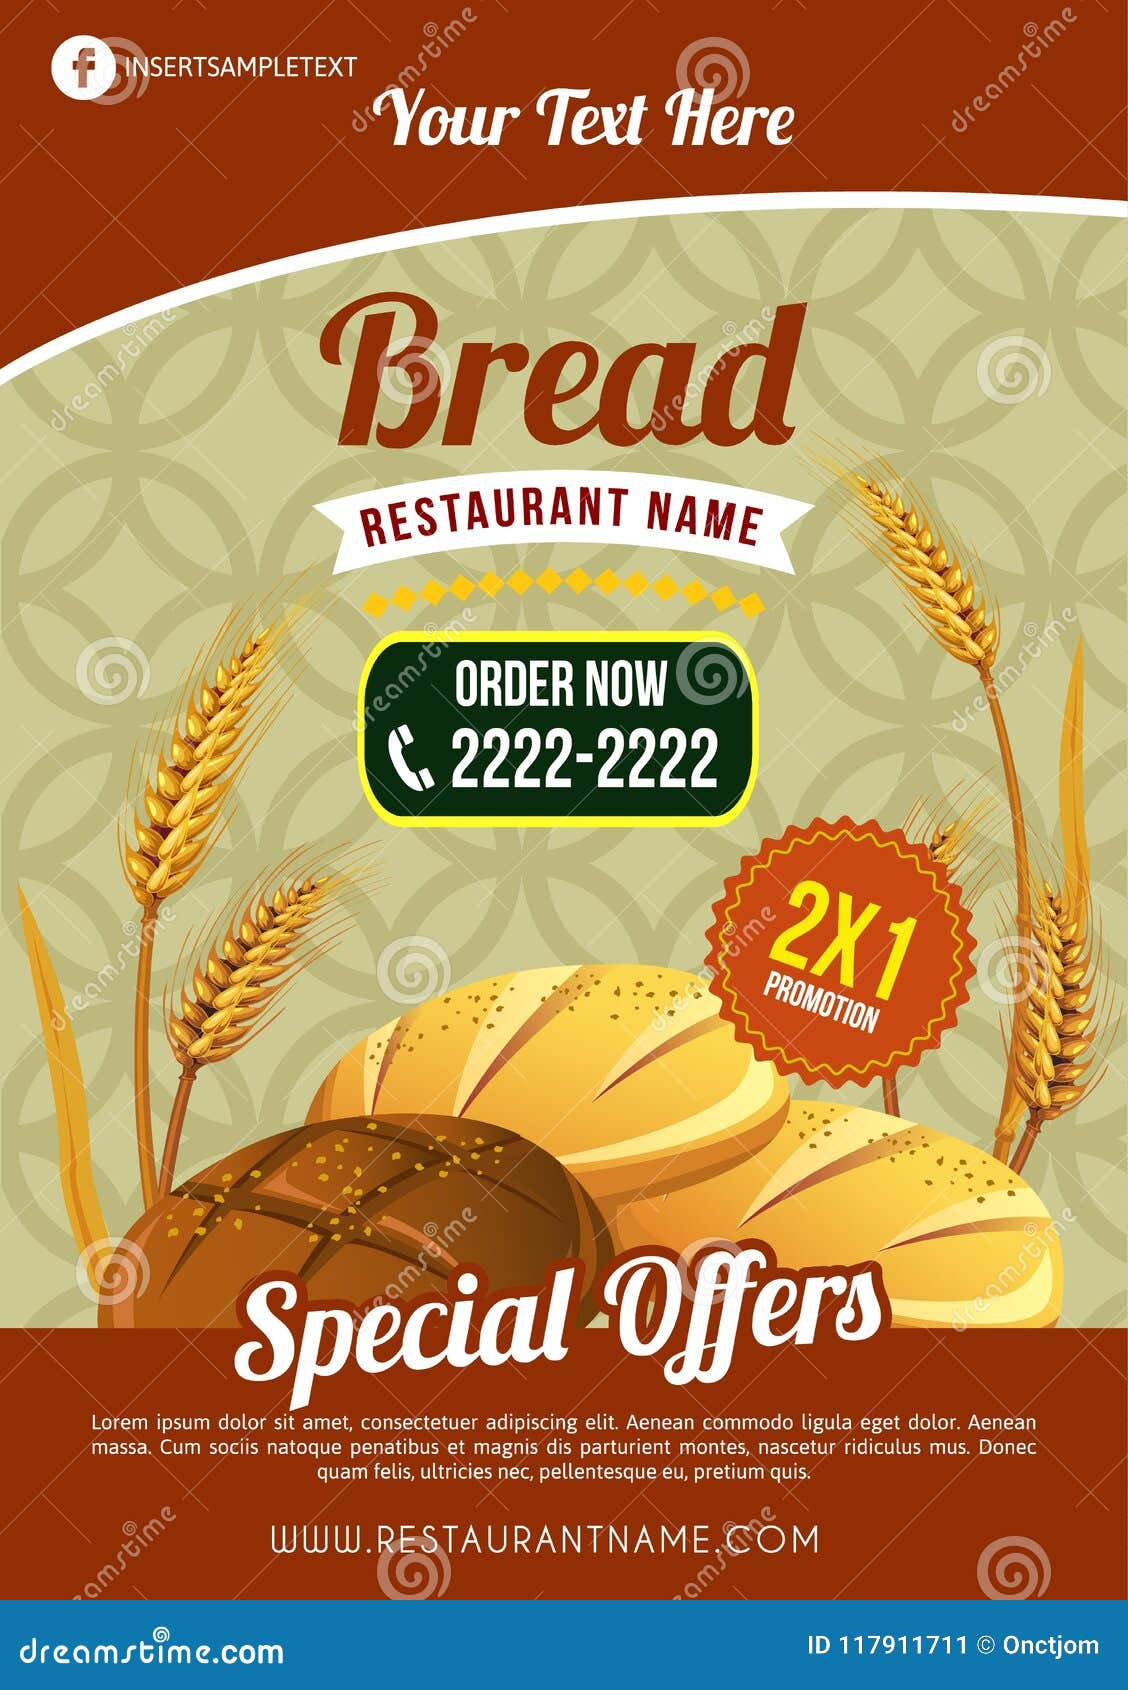 Bakery Restaurant Promotional Template Stock Vector Illustration Of Brown Flour